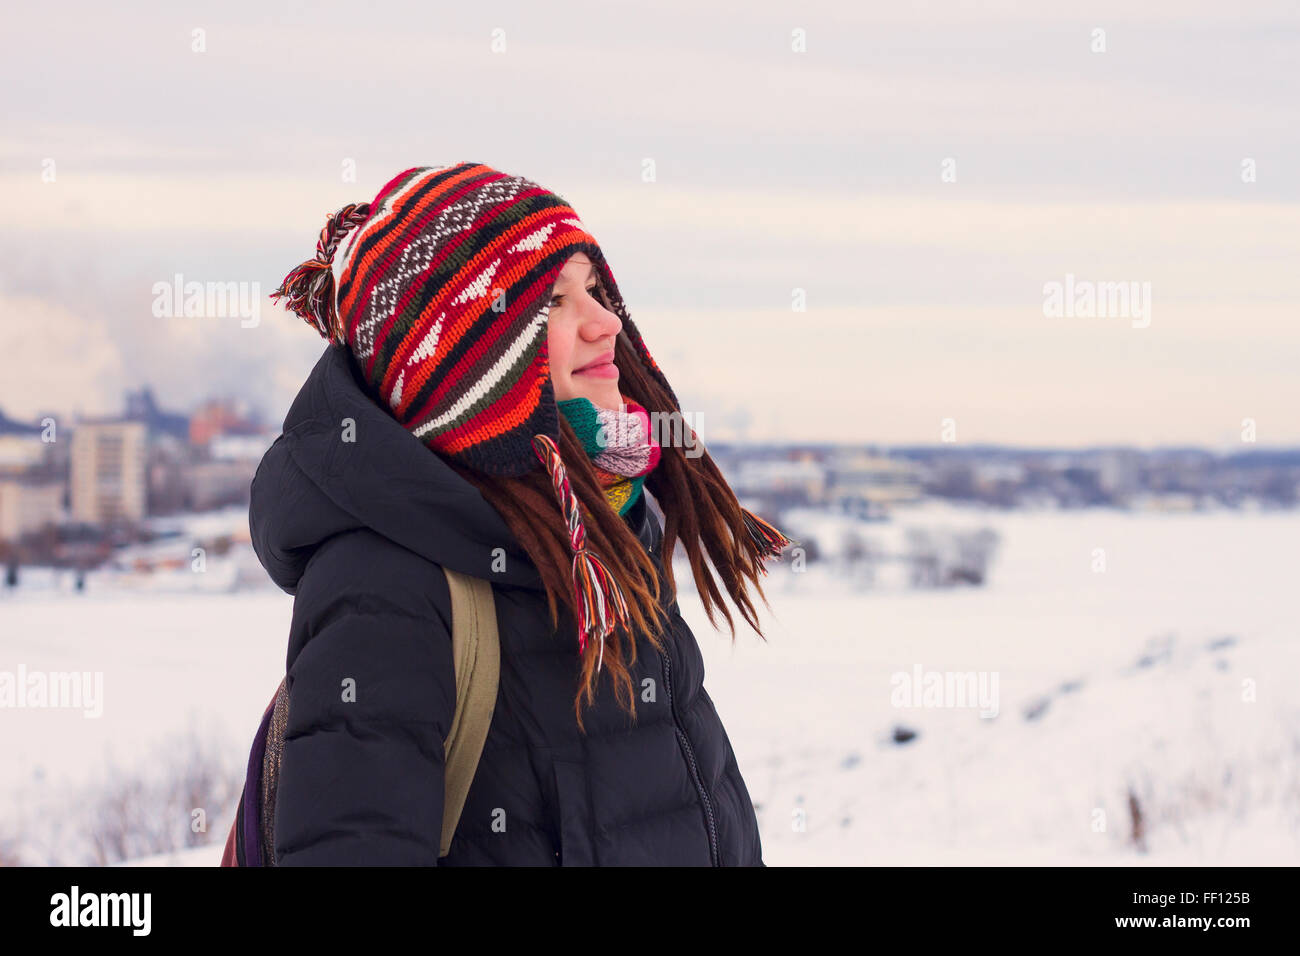 Caucasian woman admiring snowy landscape Stock Photo